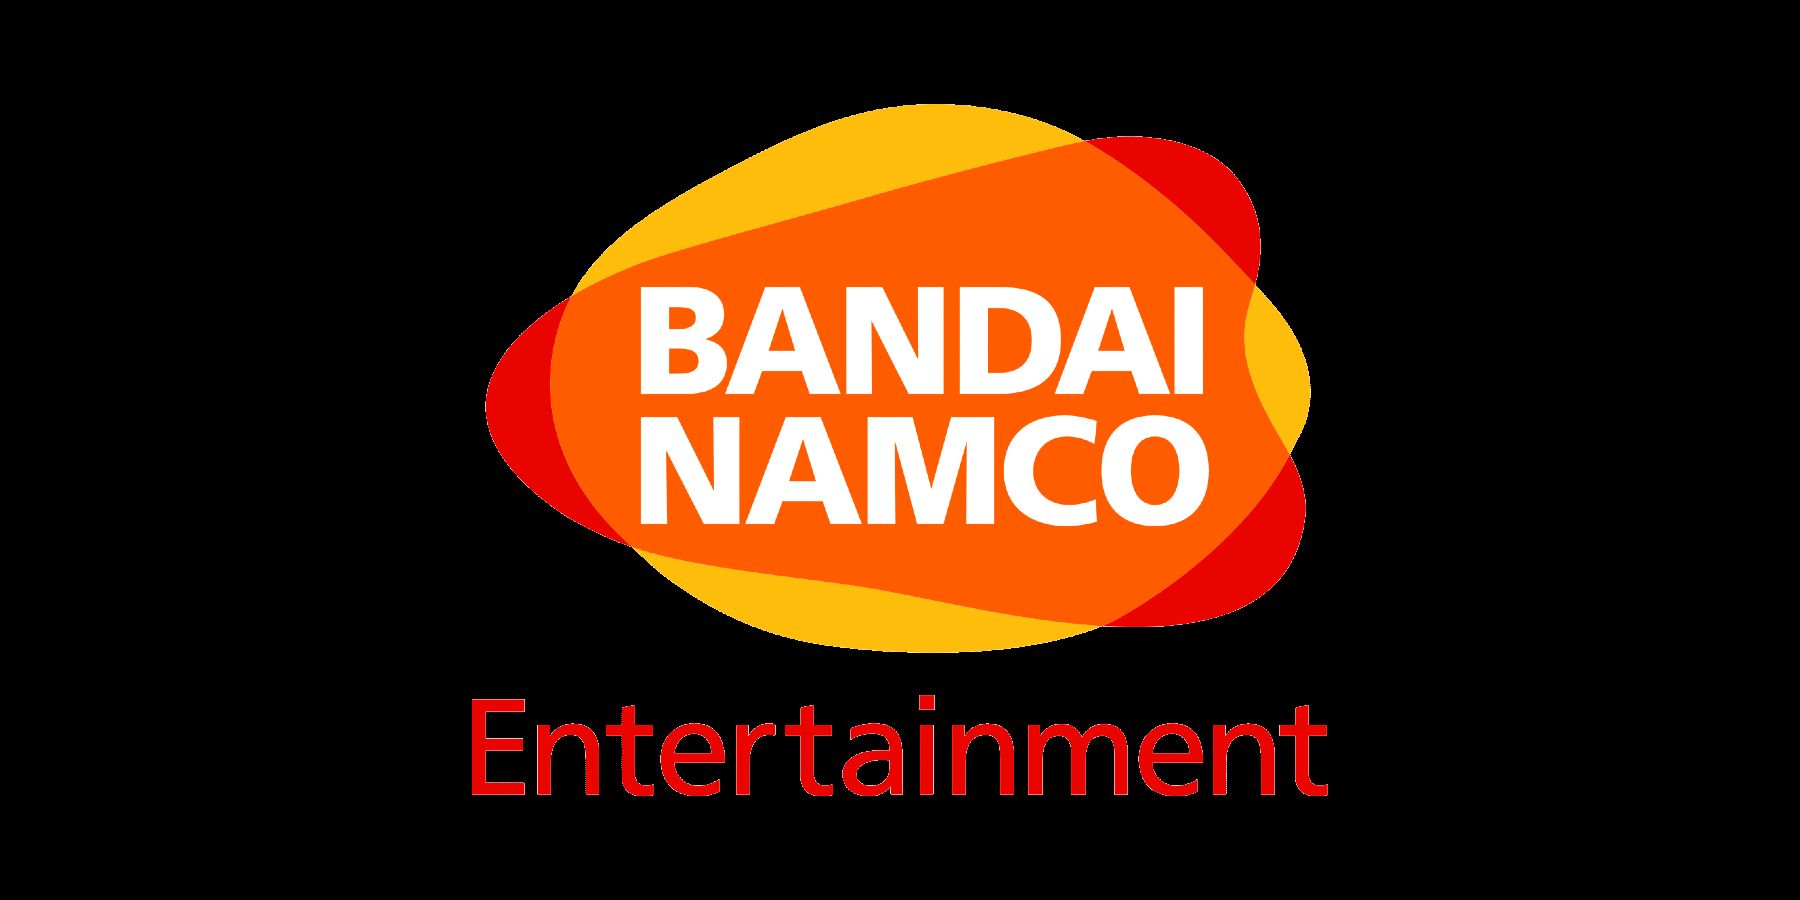 Bandai Namco har en ny logo